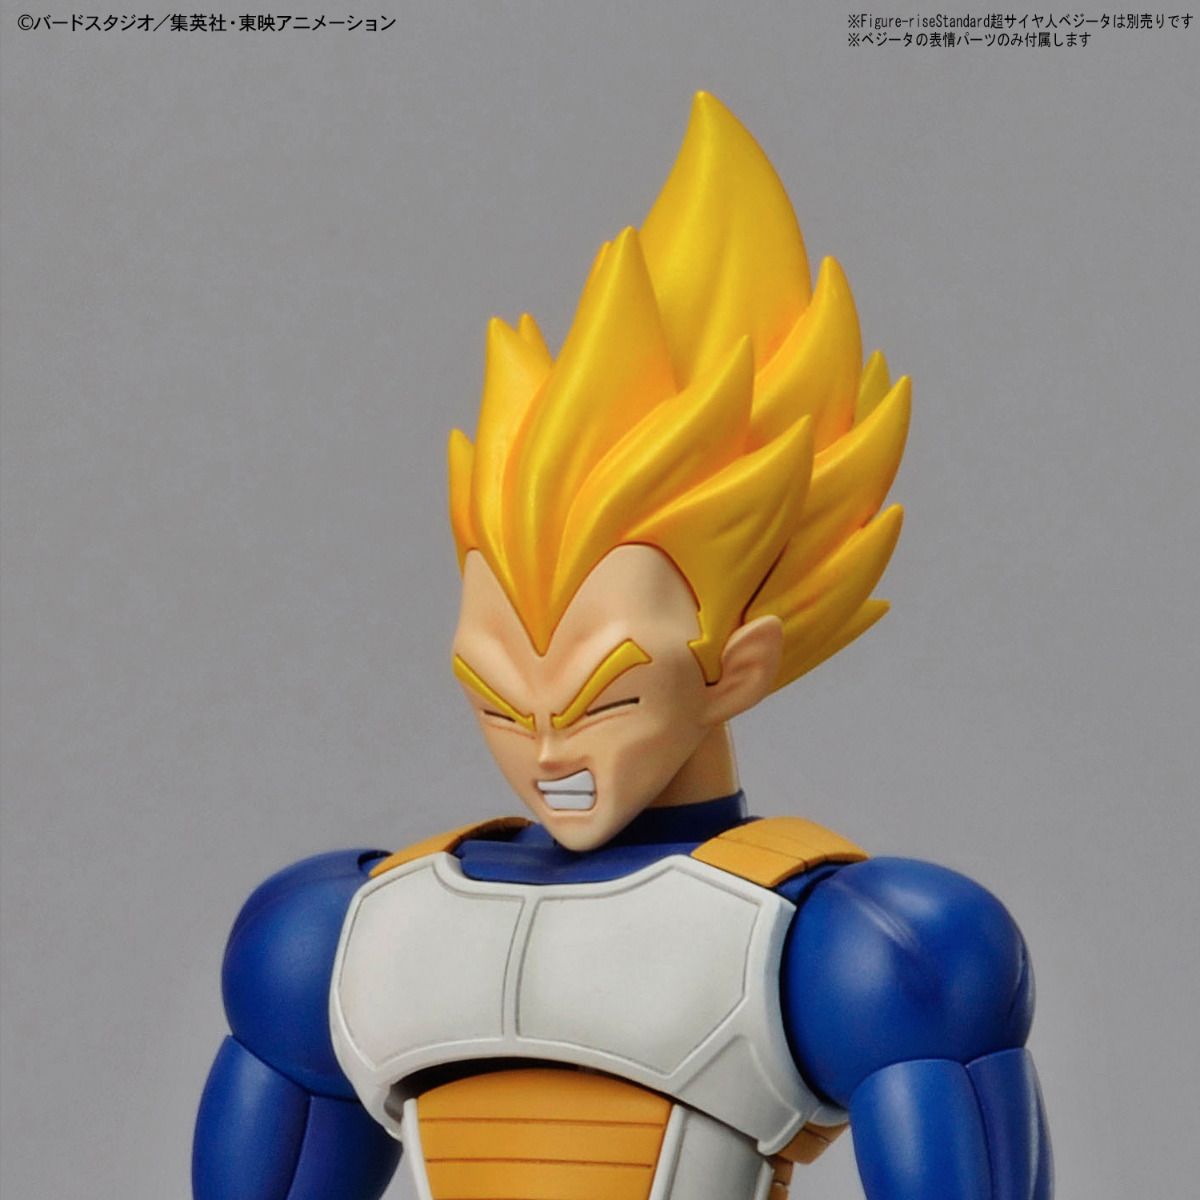  Bandai Spirits Figure-Rise Standard Legendary Super Saiyan  Broly (New Pkg Ver) Dragon Ball Z, Multi : Toys & Games